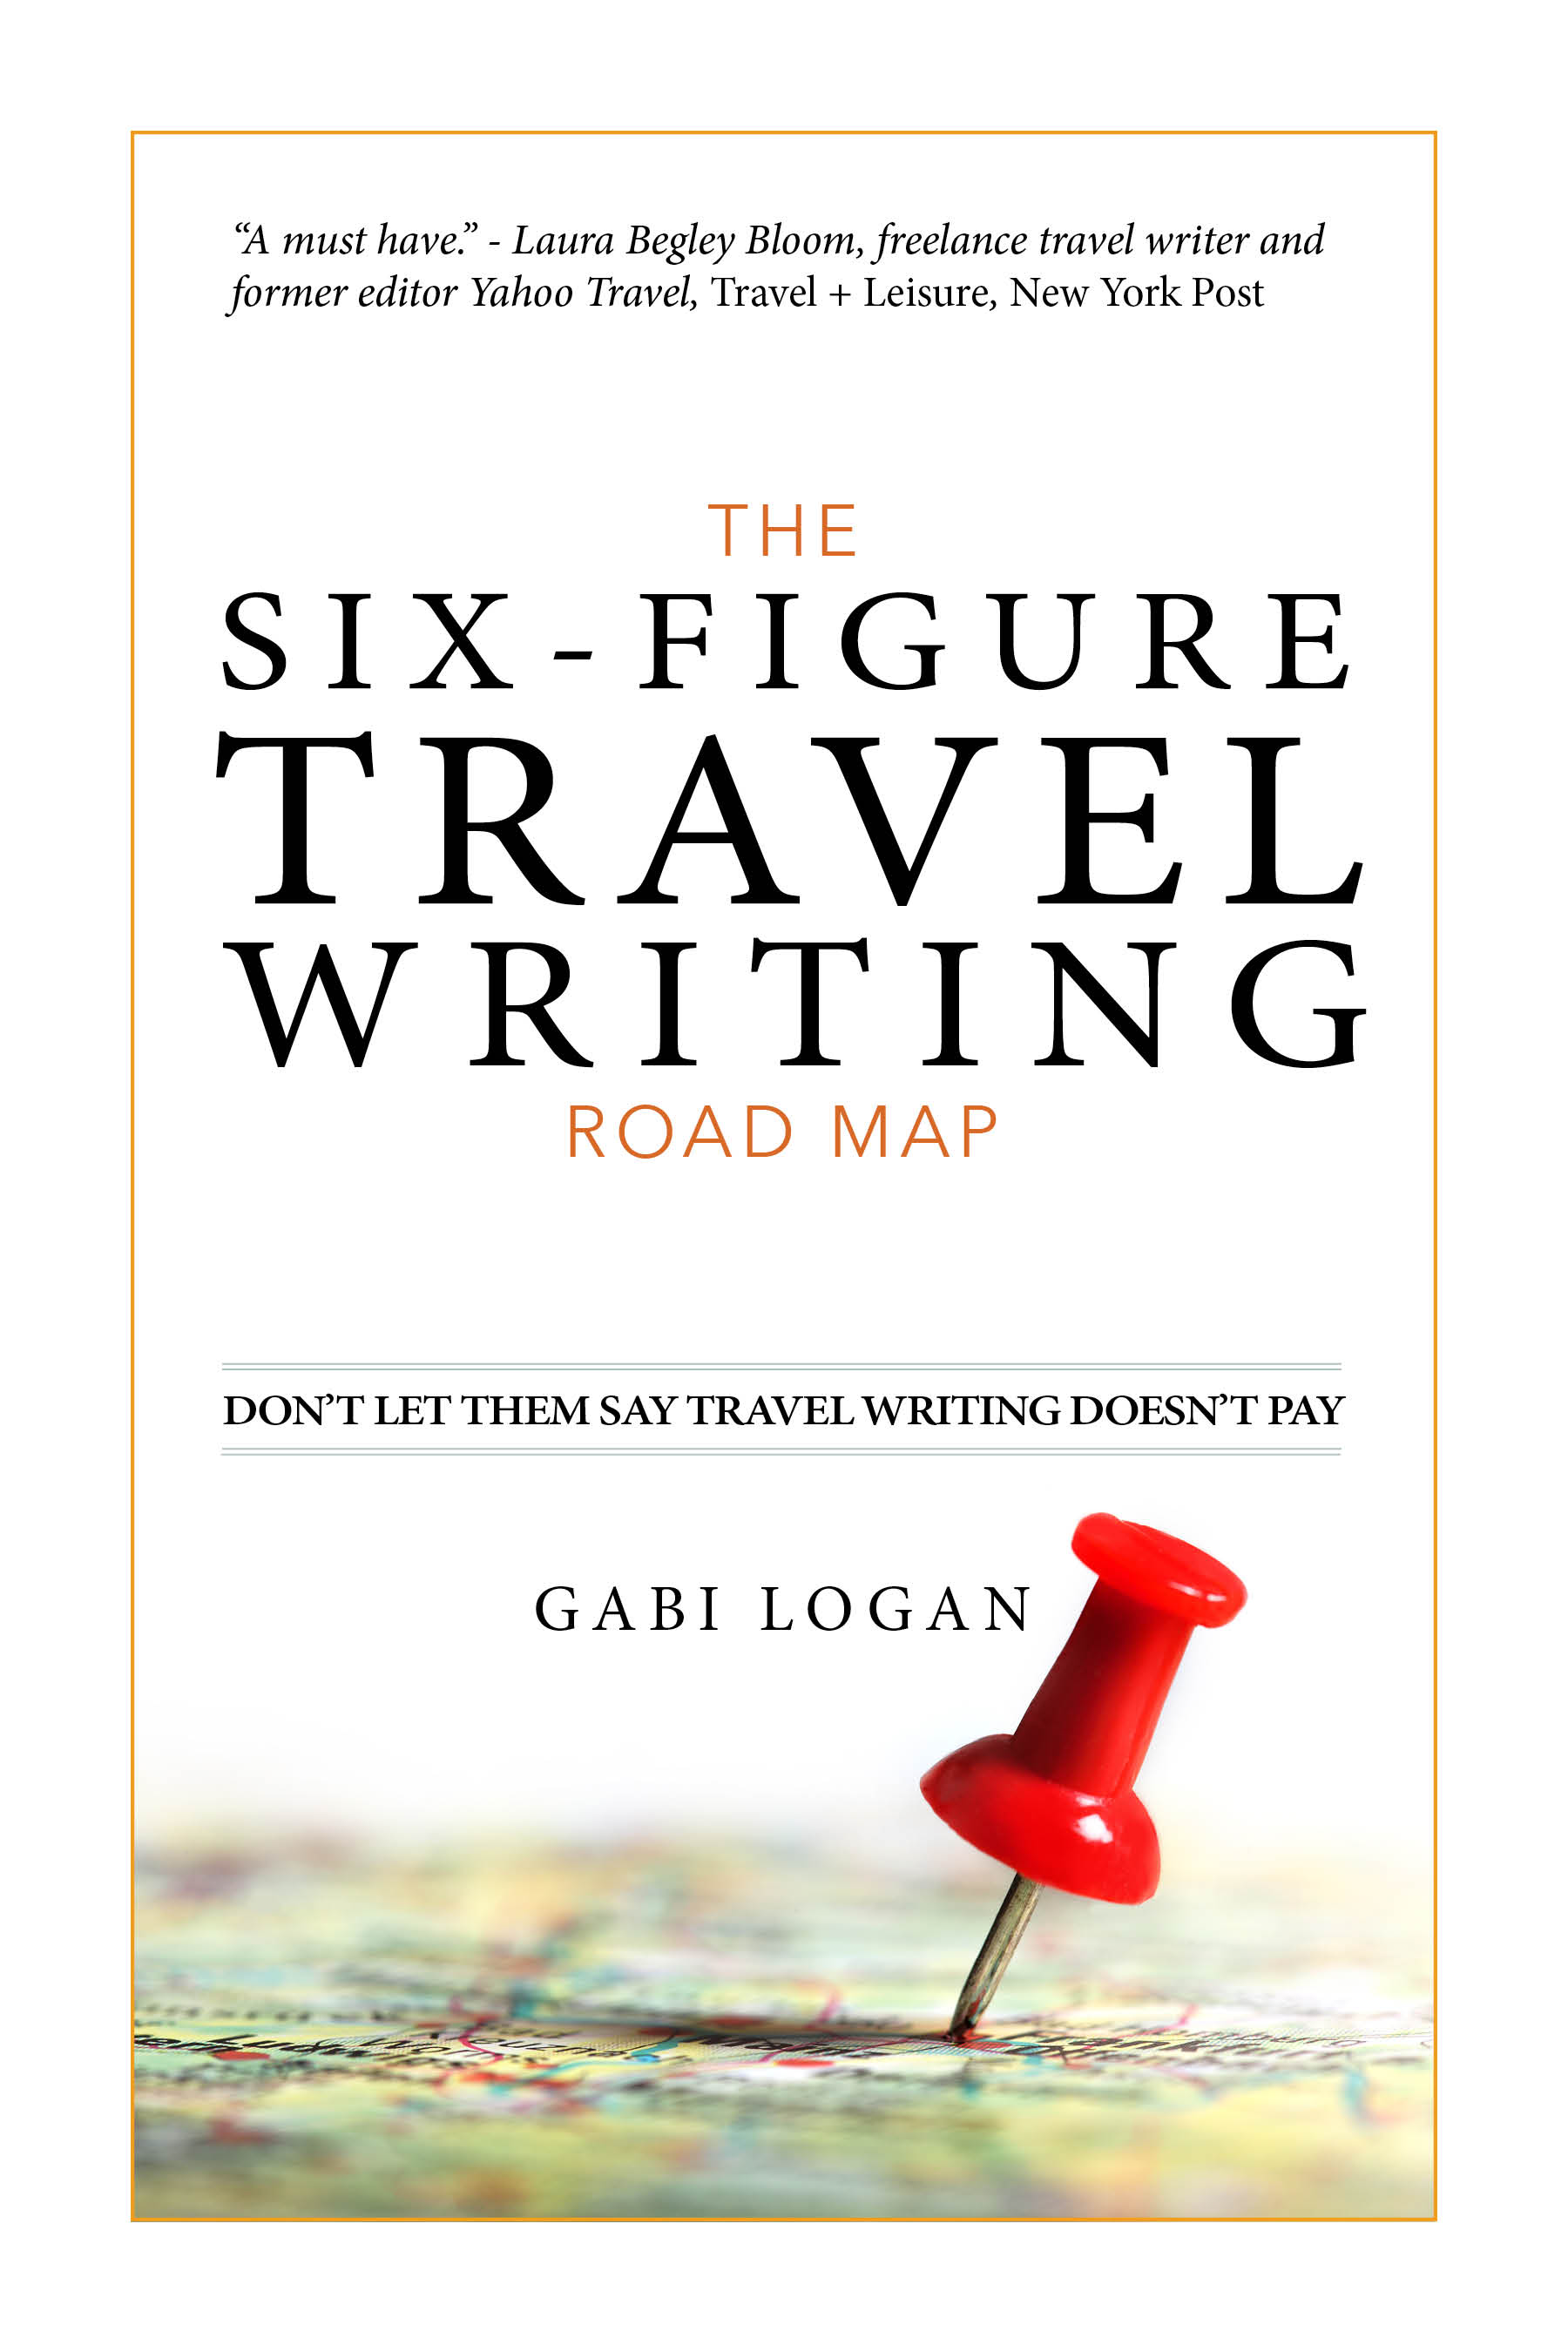 The Six-Figure Travel Writing Road Map